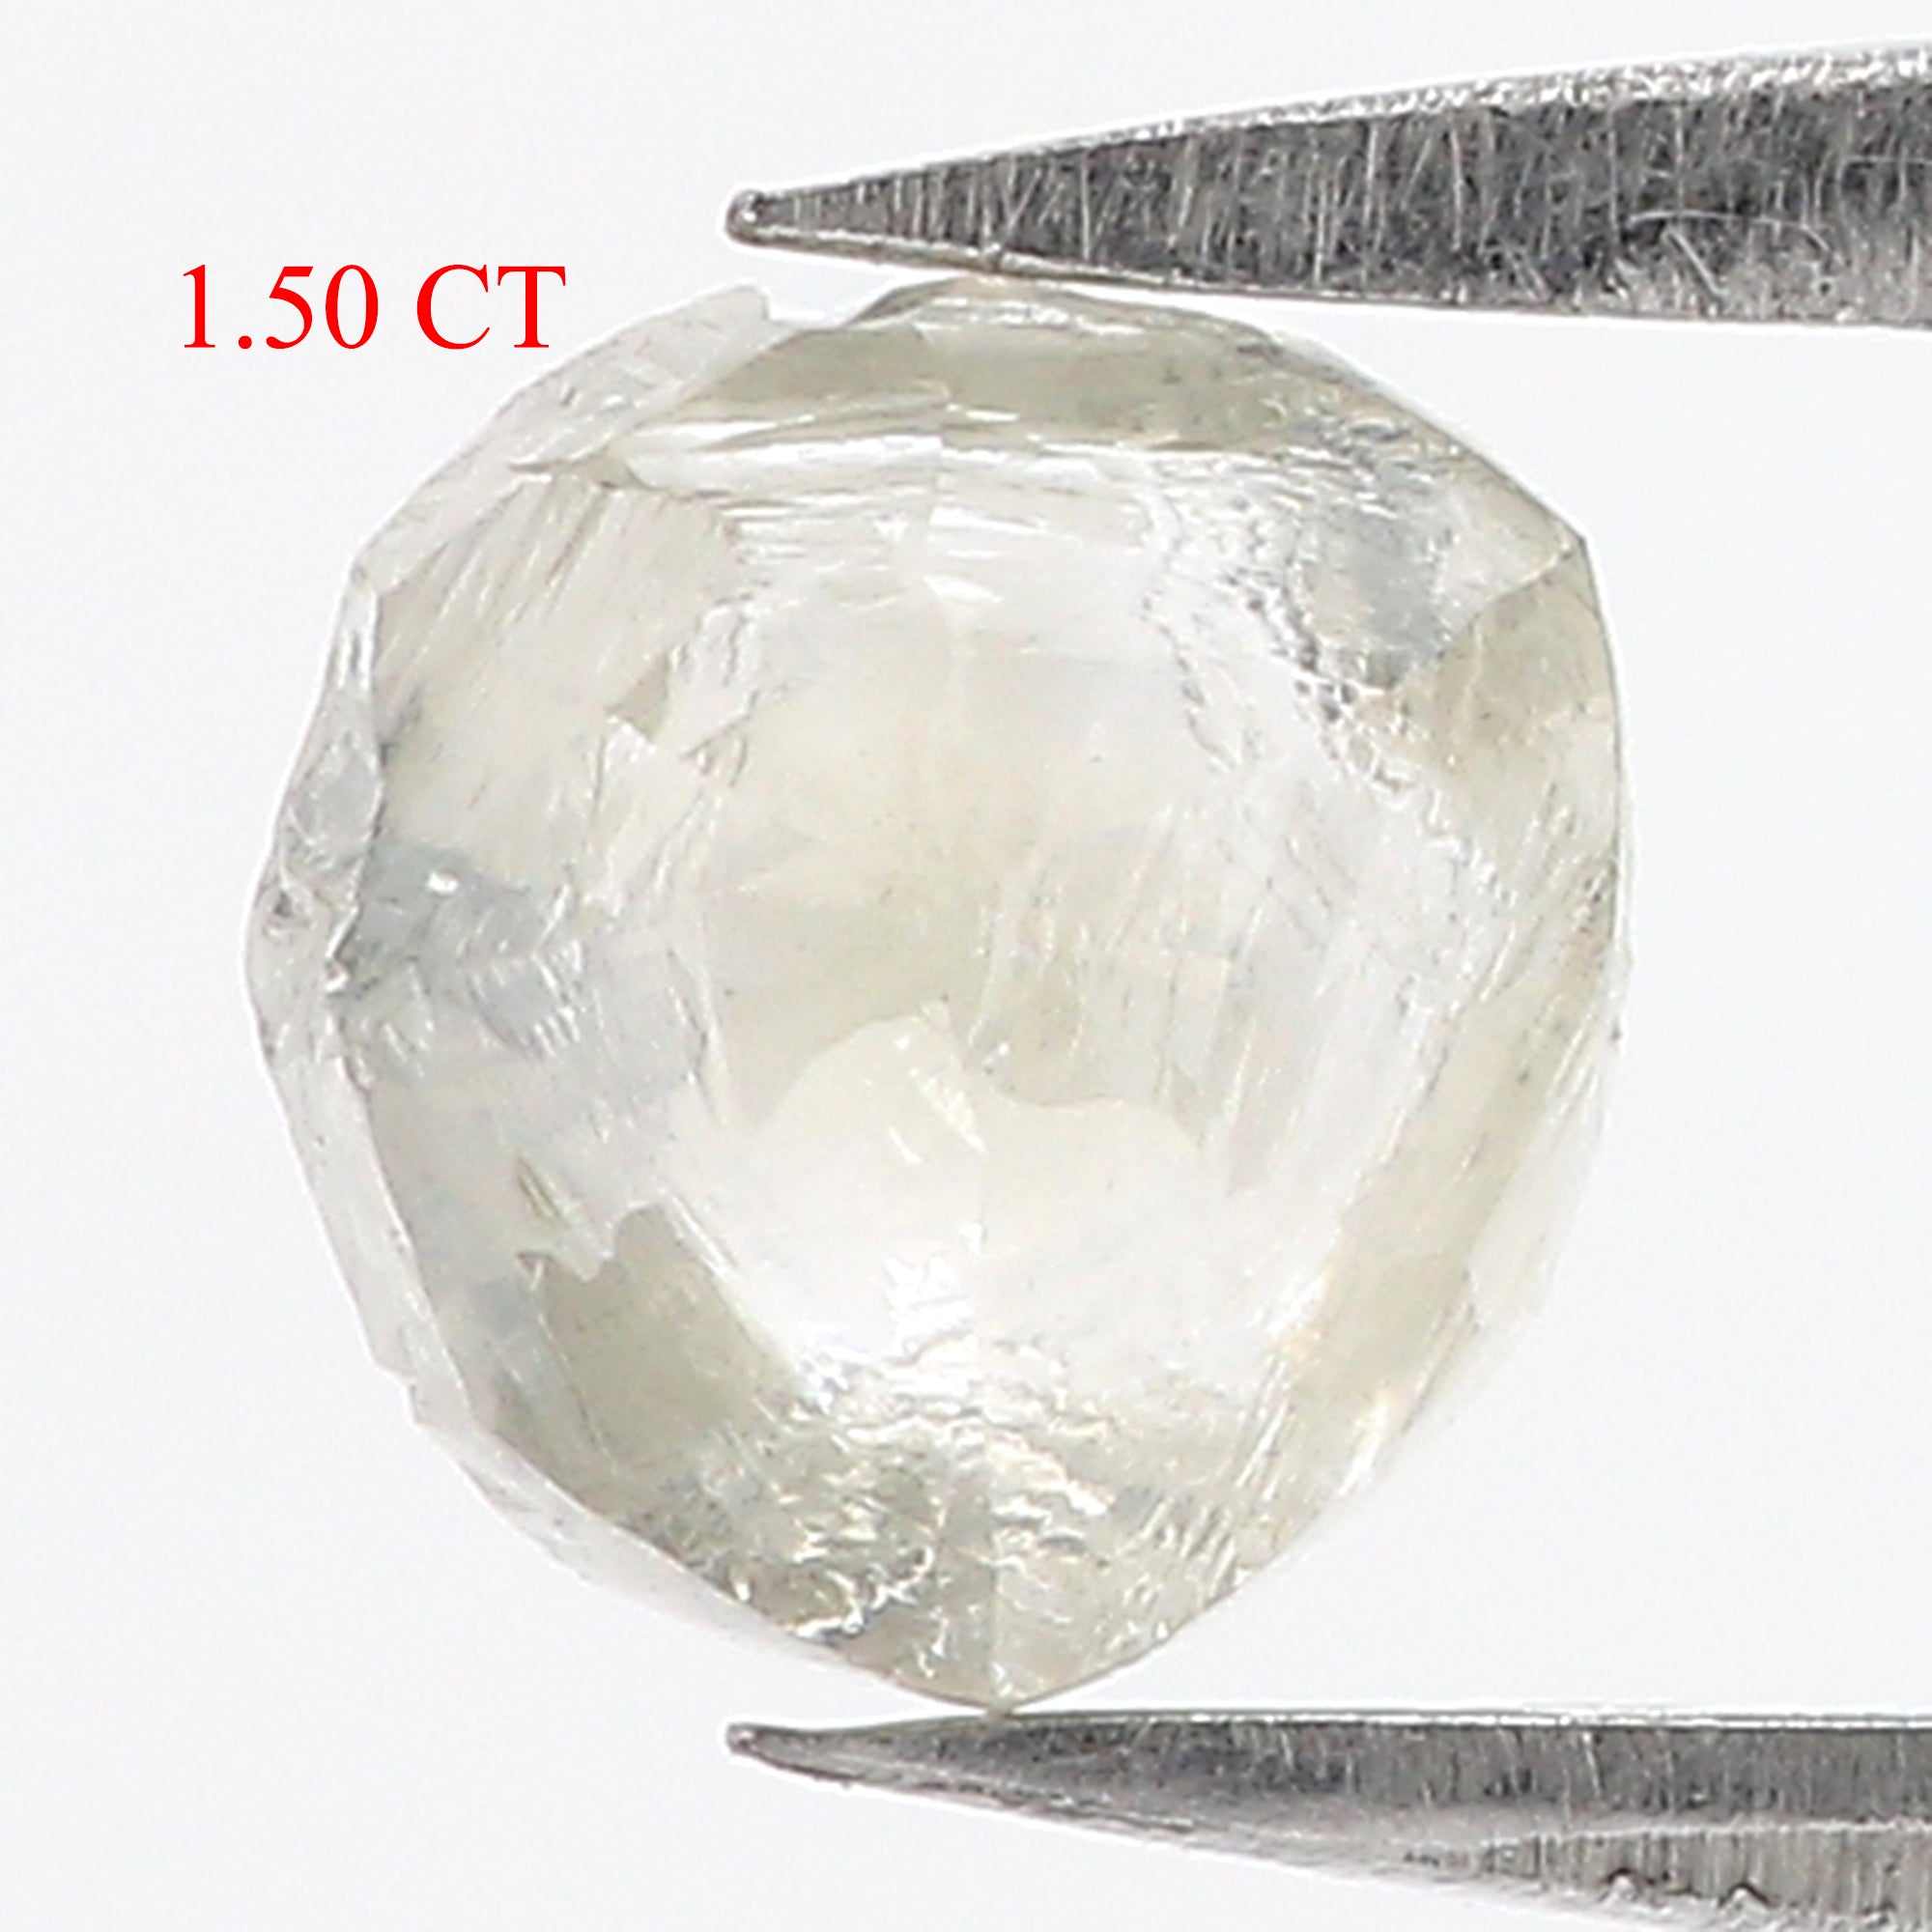 1.50 CT Natural Loose Rough Shape Diamond White Color Rough Diamond 6.35 MM Natural Loose White Diamond Rough Irregular Cut Diamond QL3119